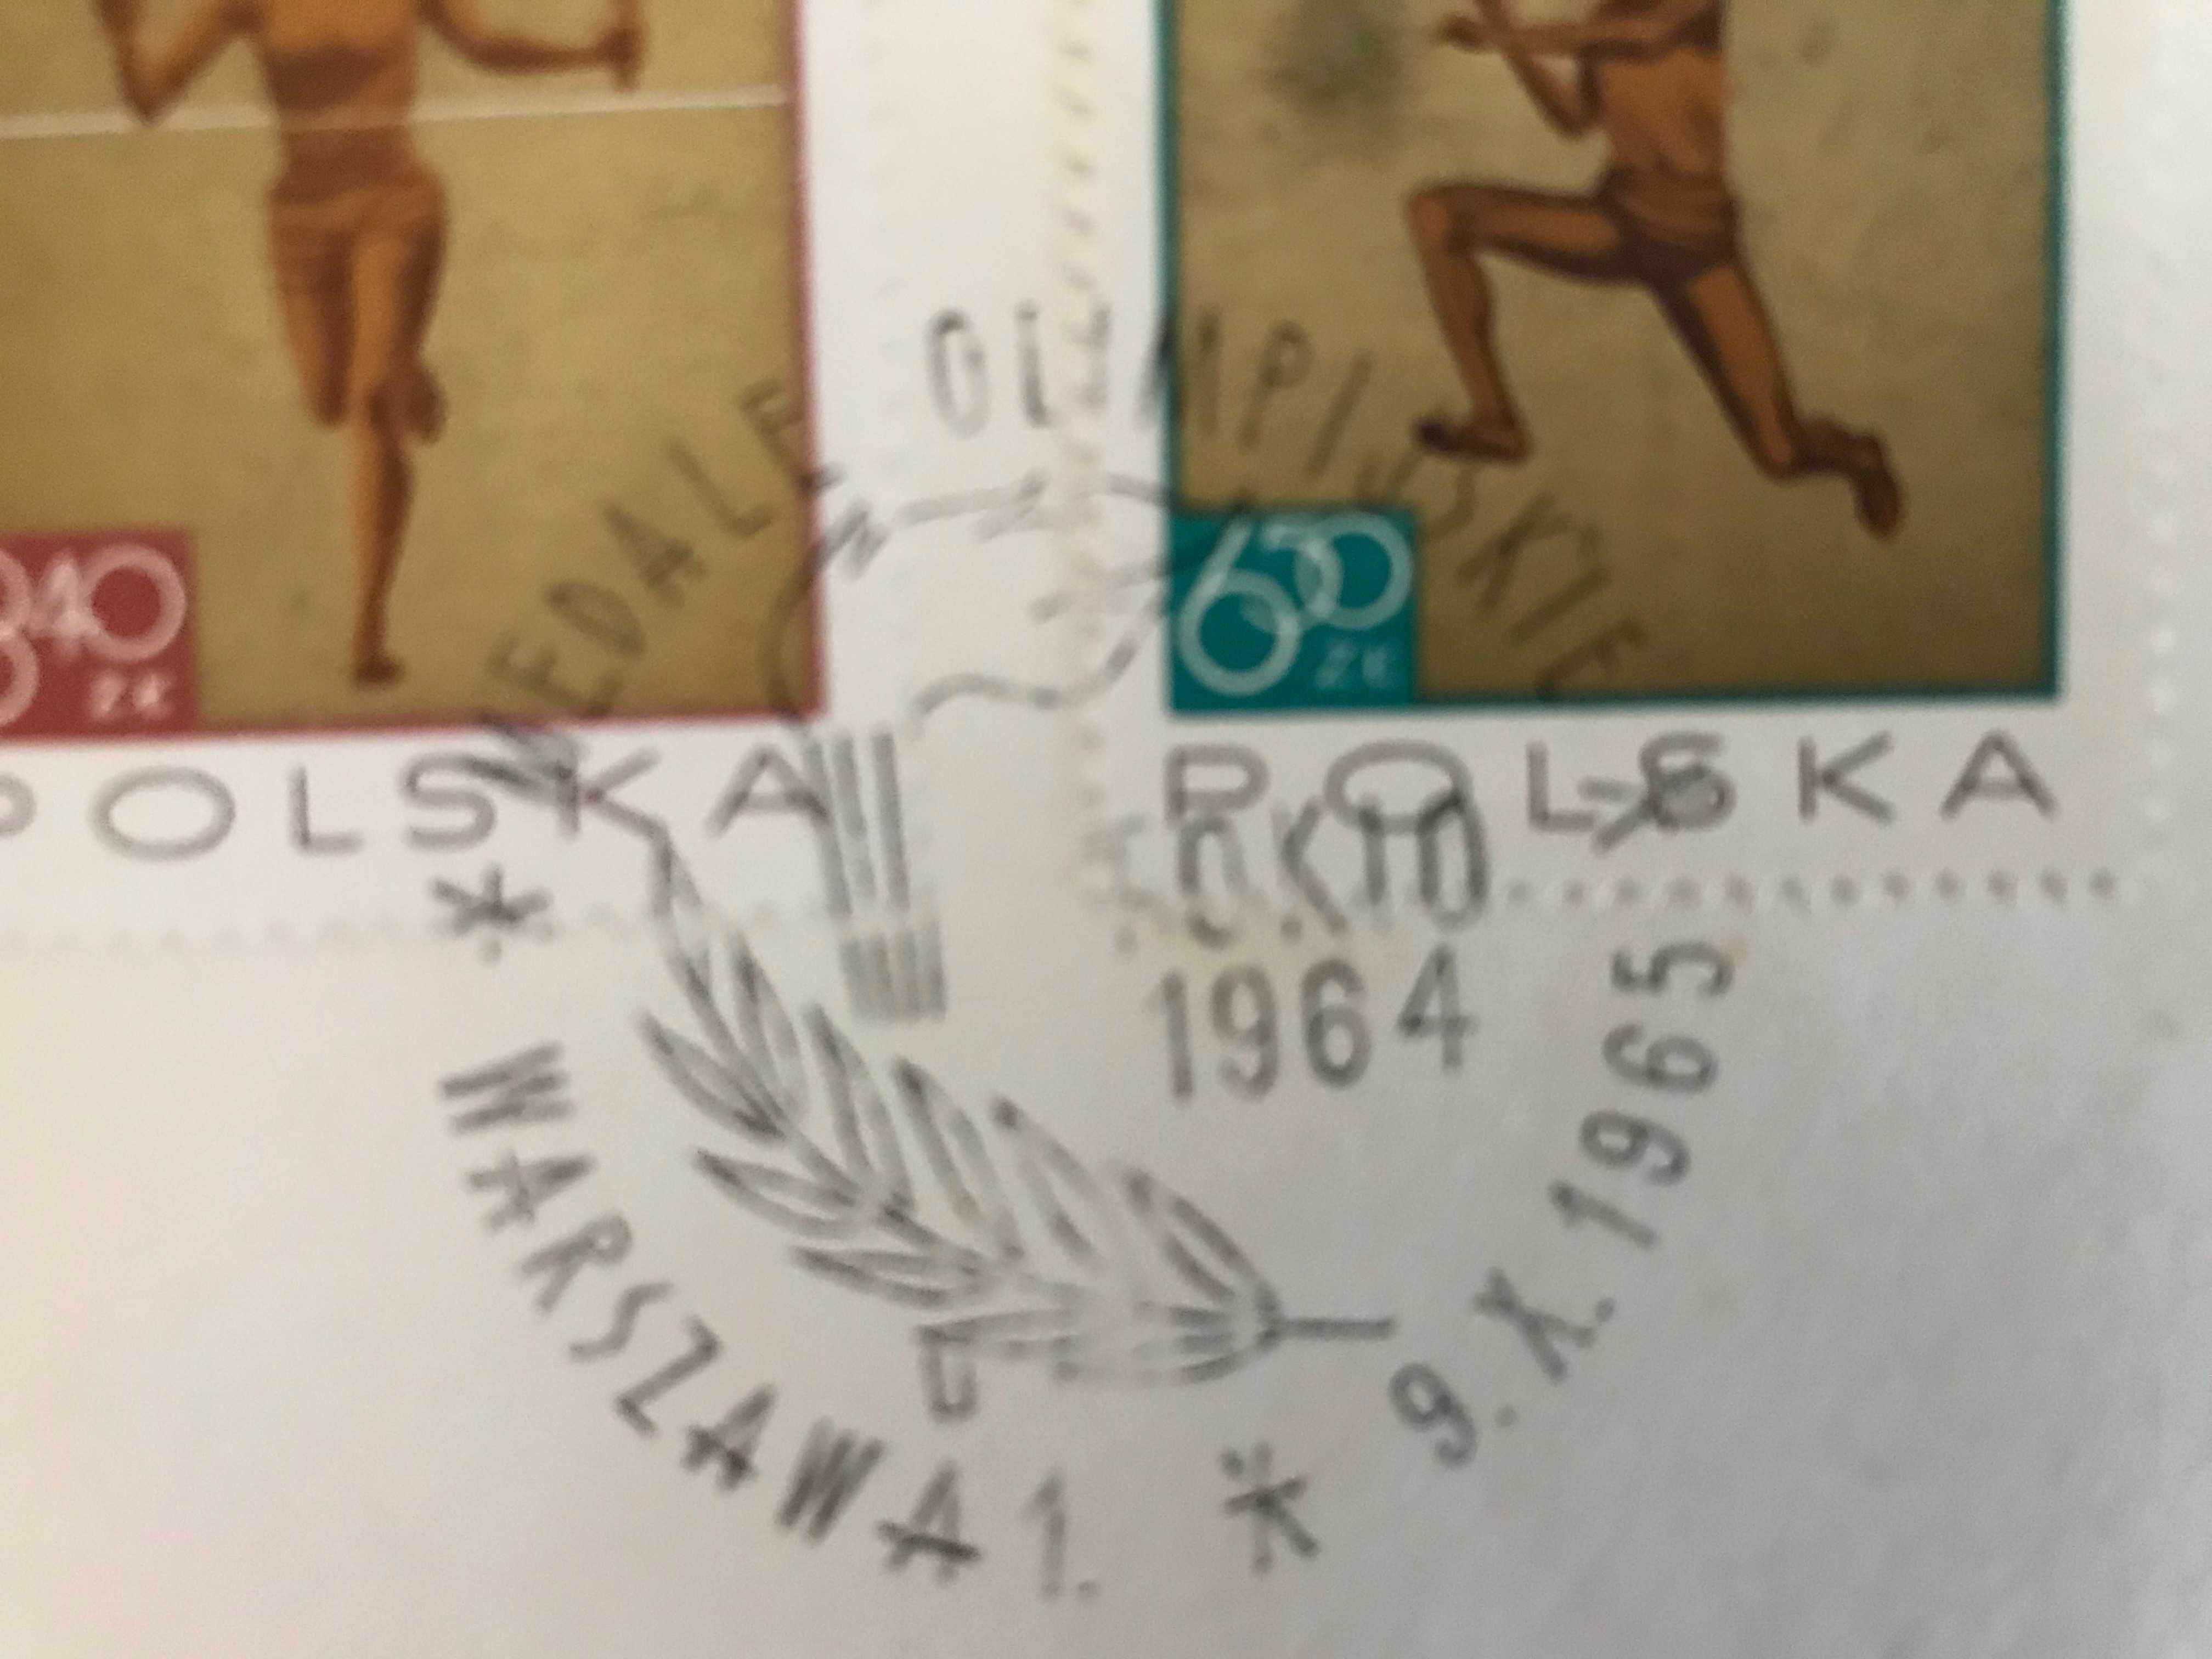 Medale olimpijskie Tokio 1964 - koperty FDC - 1965r.